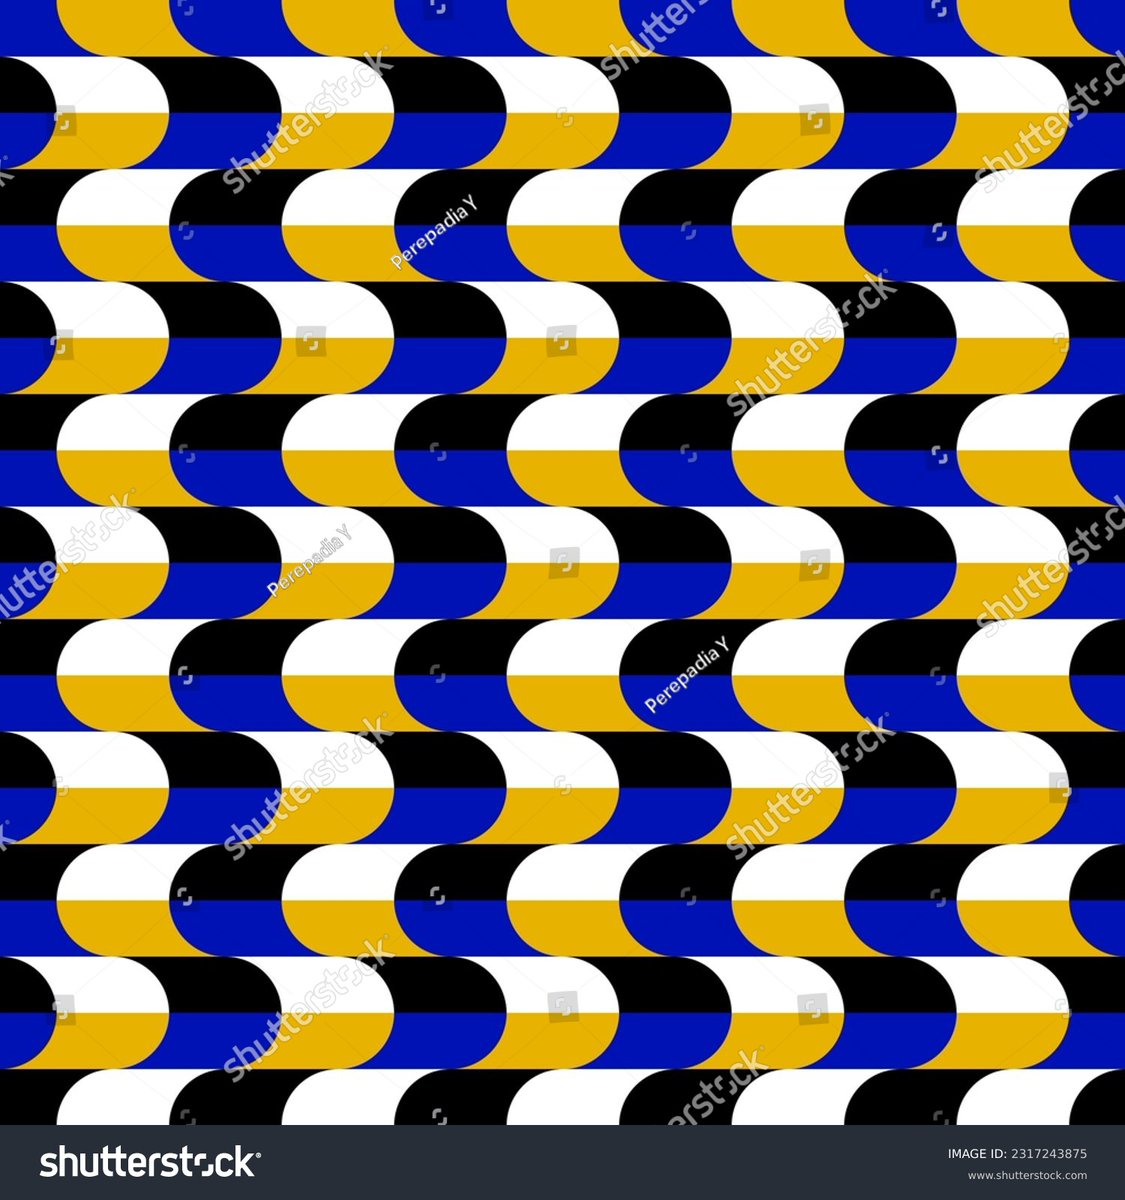 Check out my new artwork shutterstock.com/image/23172438…

#Vector #opticalart #seamlesspattern #texture #texturedesign #abstractart #graphicart #geometricart #digitalart #graphicdesign #tileart #opticalillusion #psychedelicart #trippyart #minimalart #glitchart #Design #Shutterstock